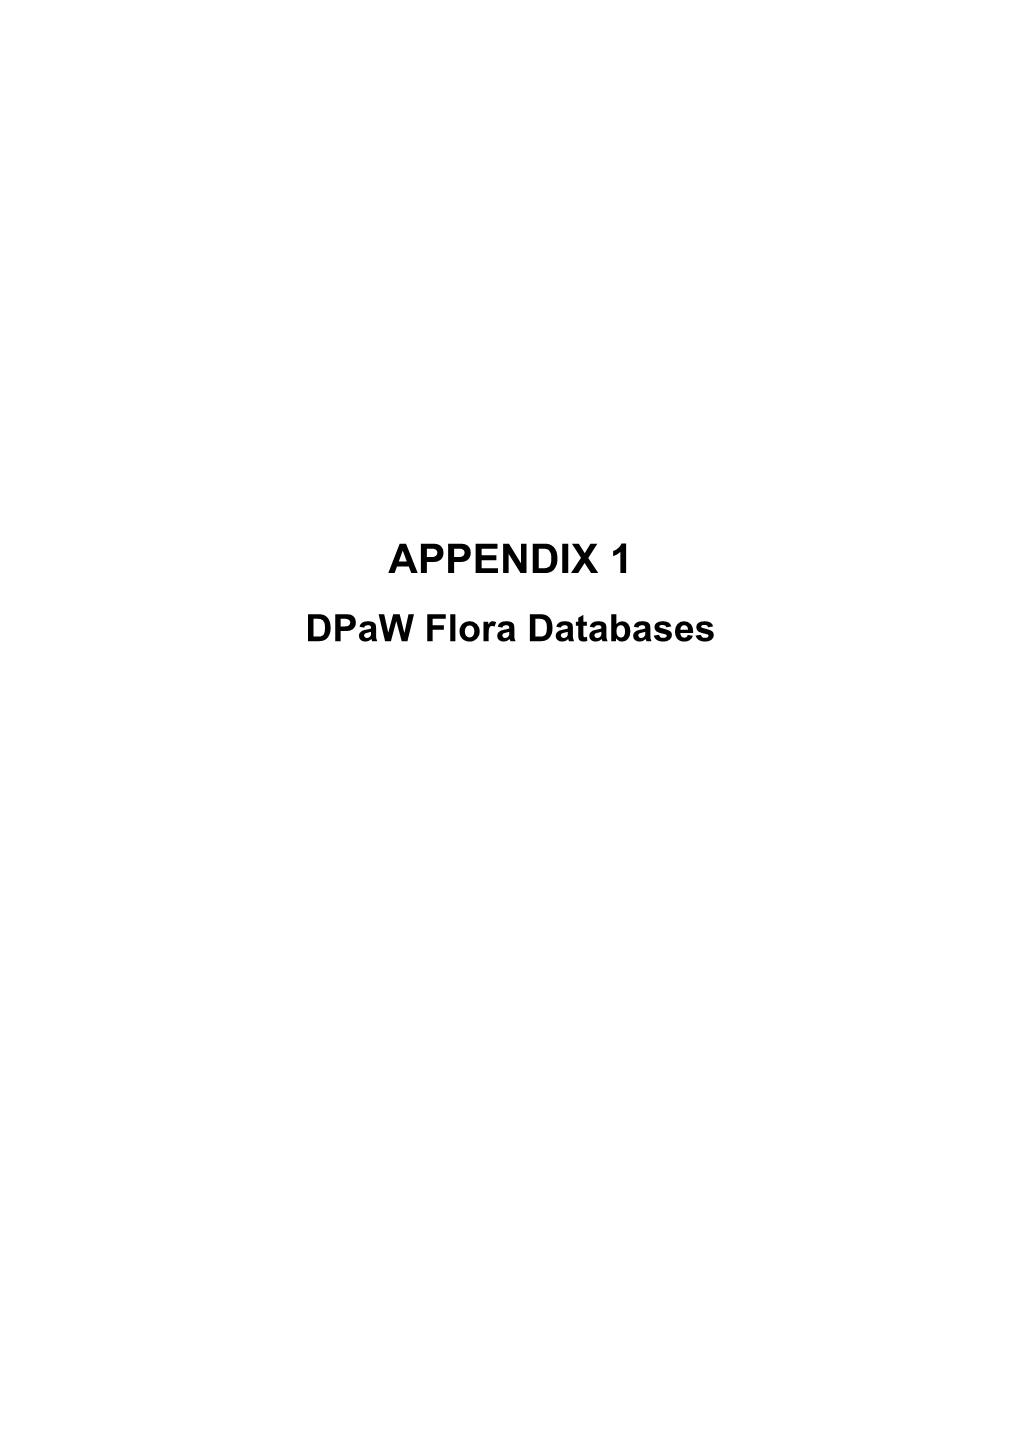 APPENDIX 1 Dpaw Flora Databases